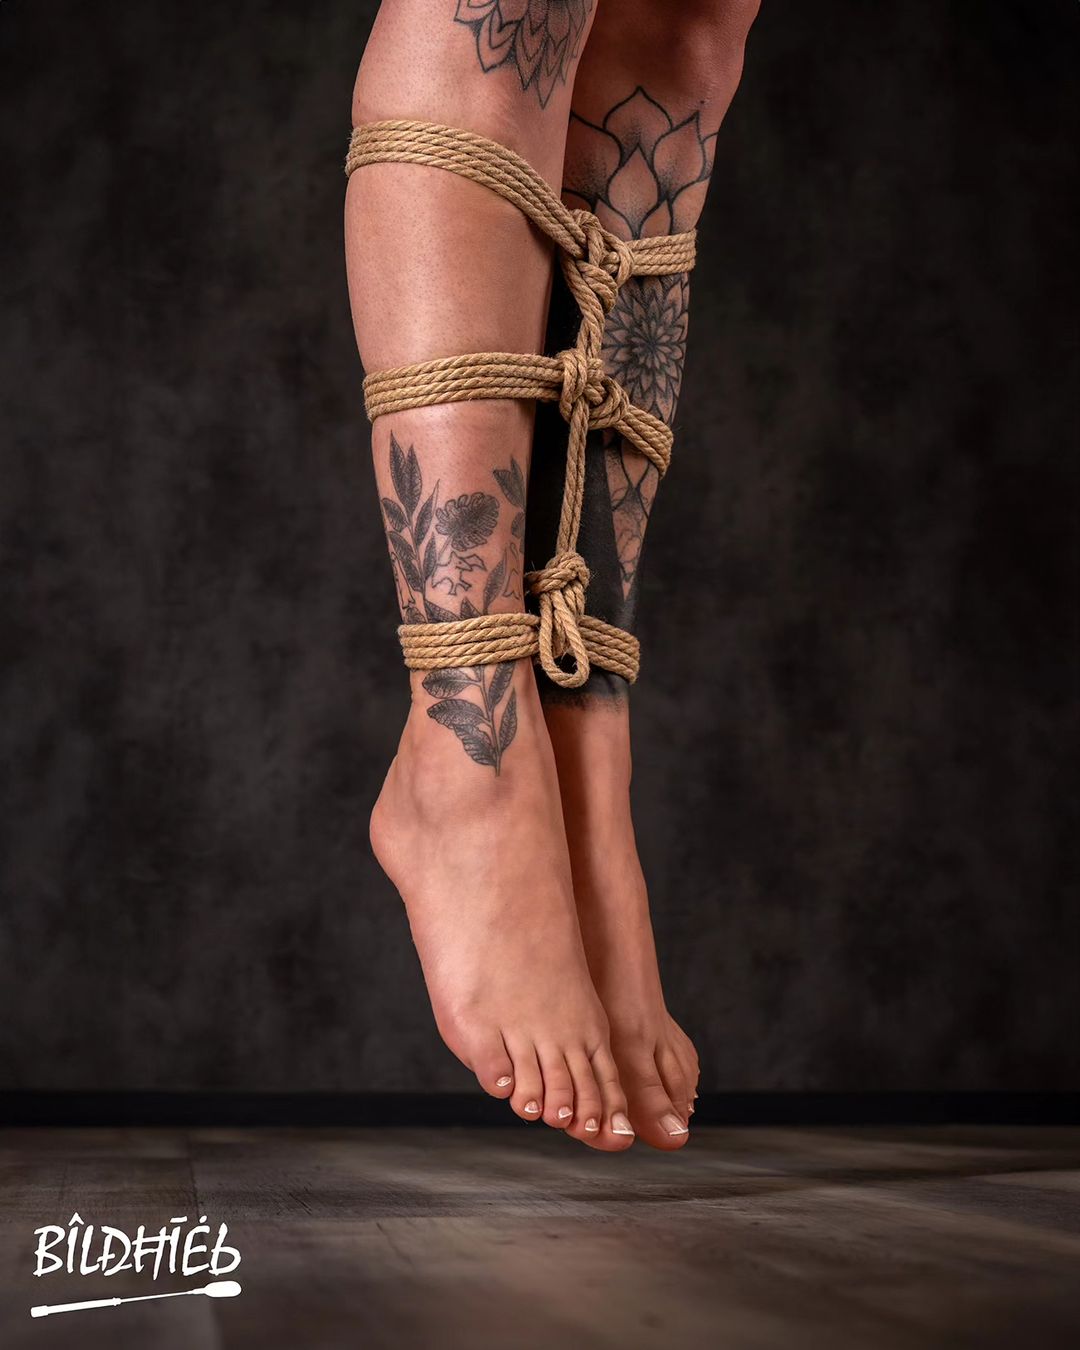 Amazing leg tattoos for women by bildhieb.shibari